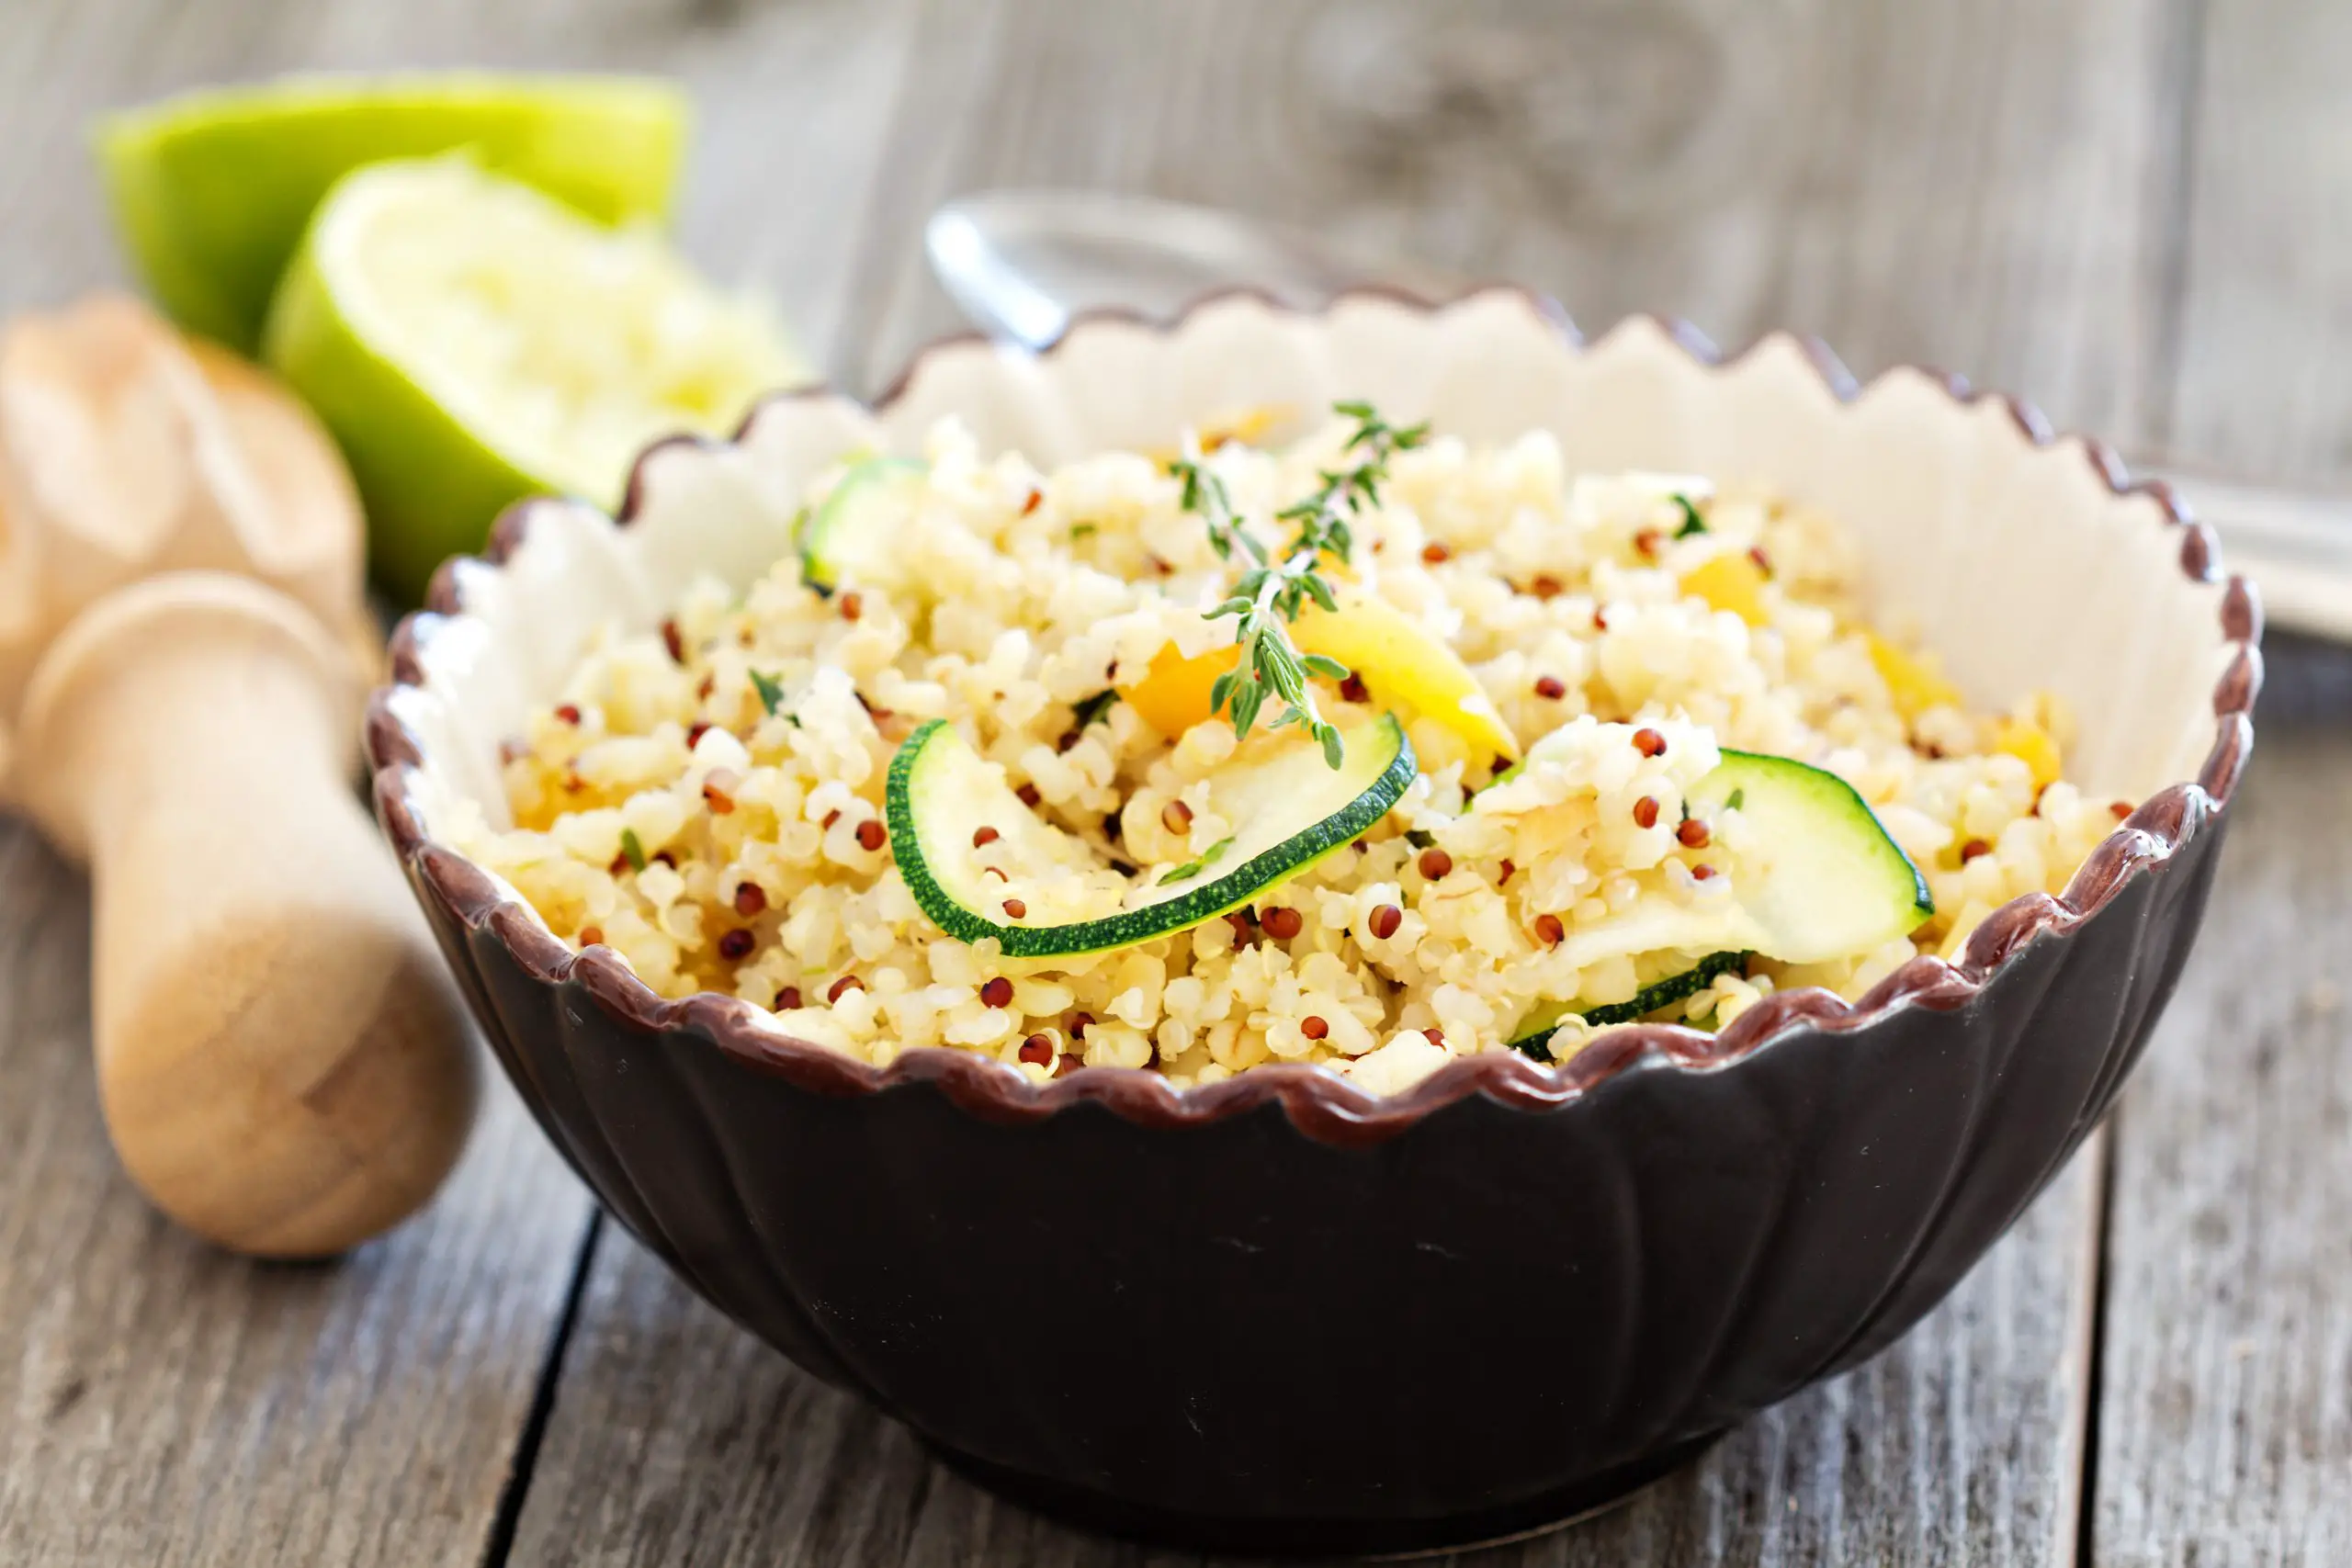 How to Reheat Quinoa